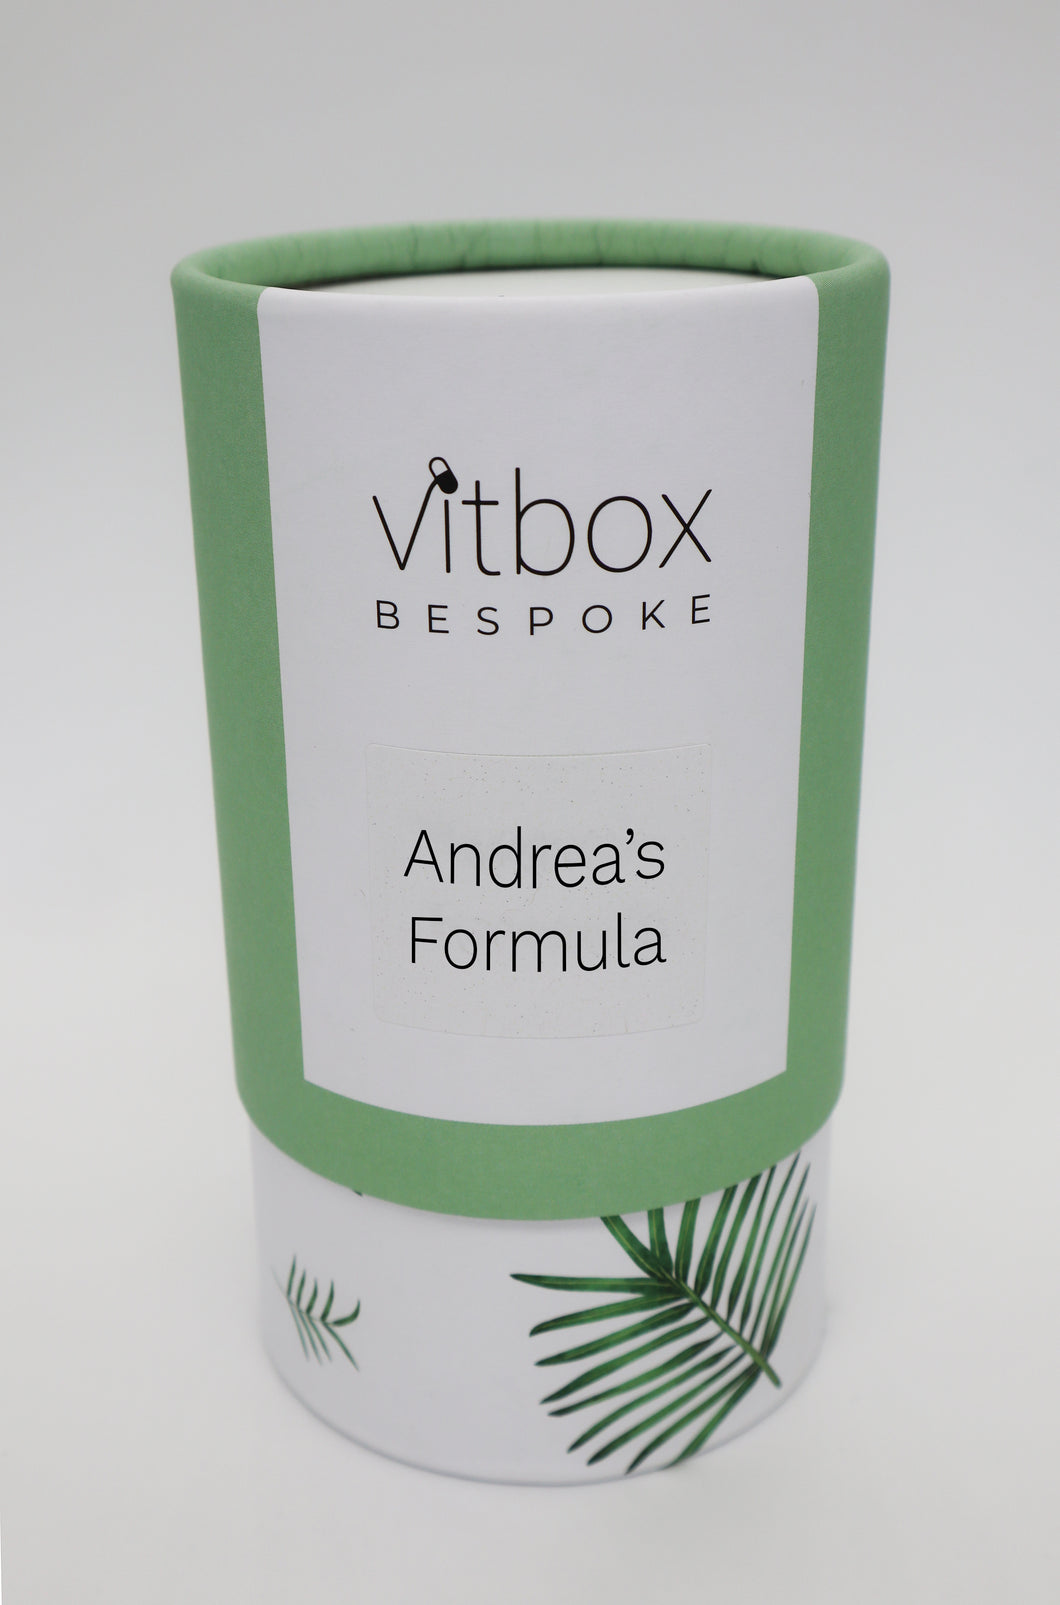 Andrea's Vitbox Bespoke